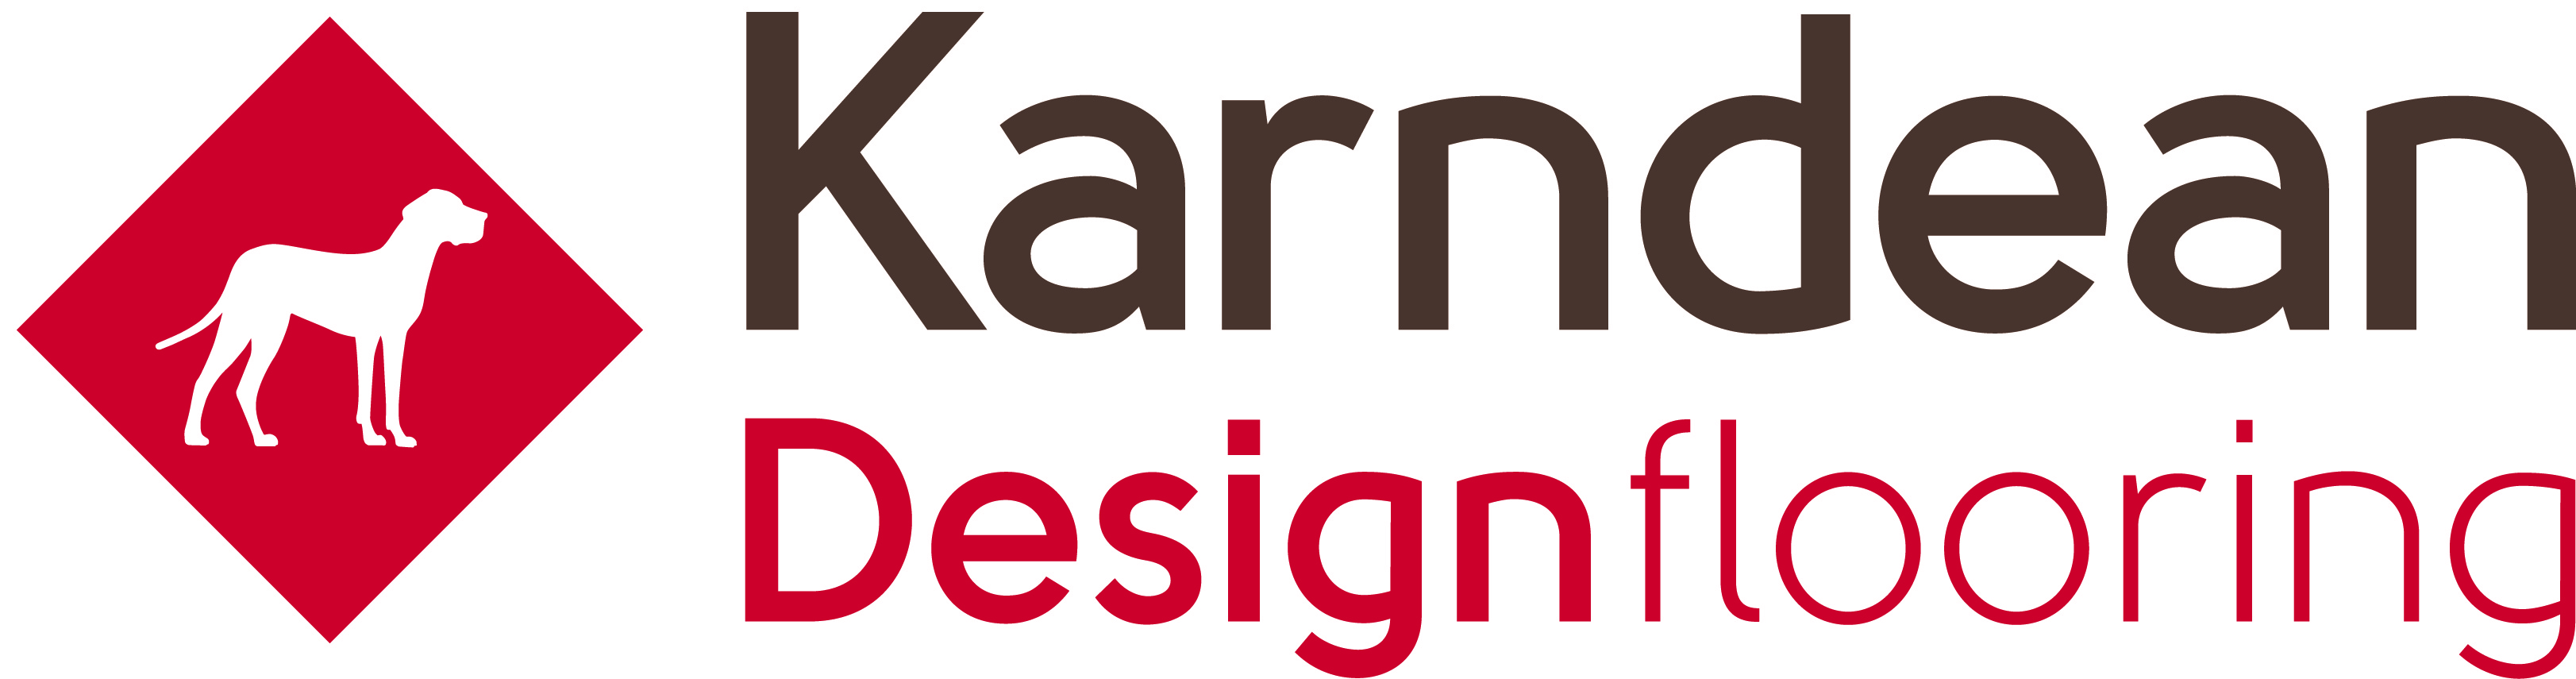 Karndean_logo-2-col-on-white-background